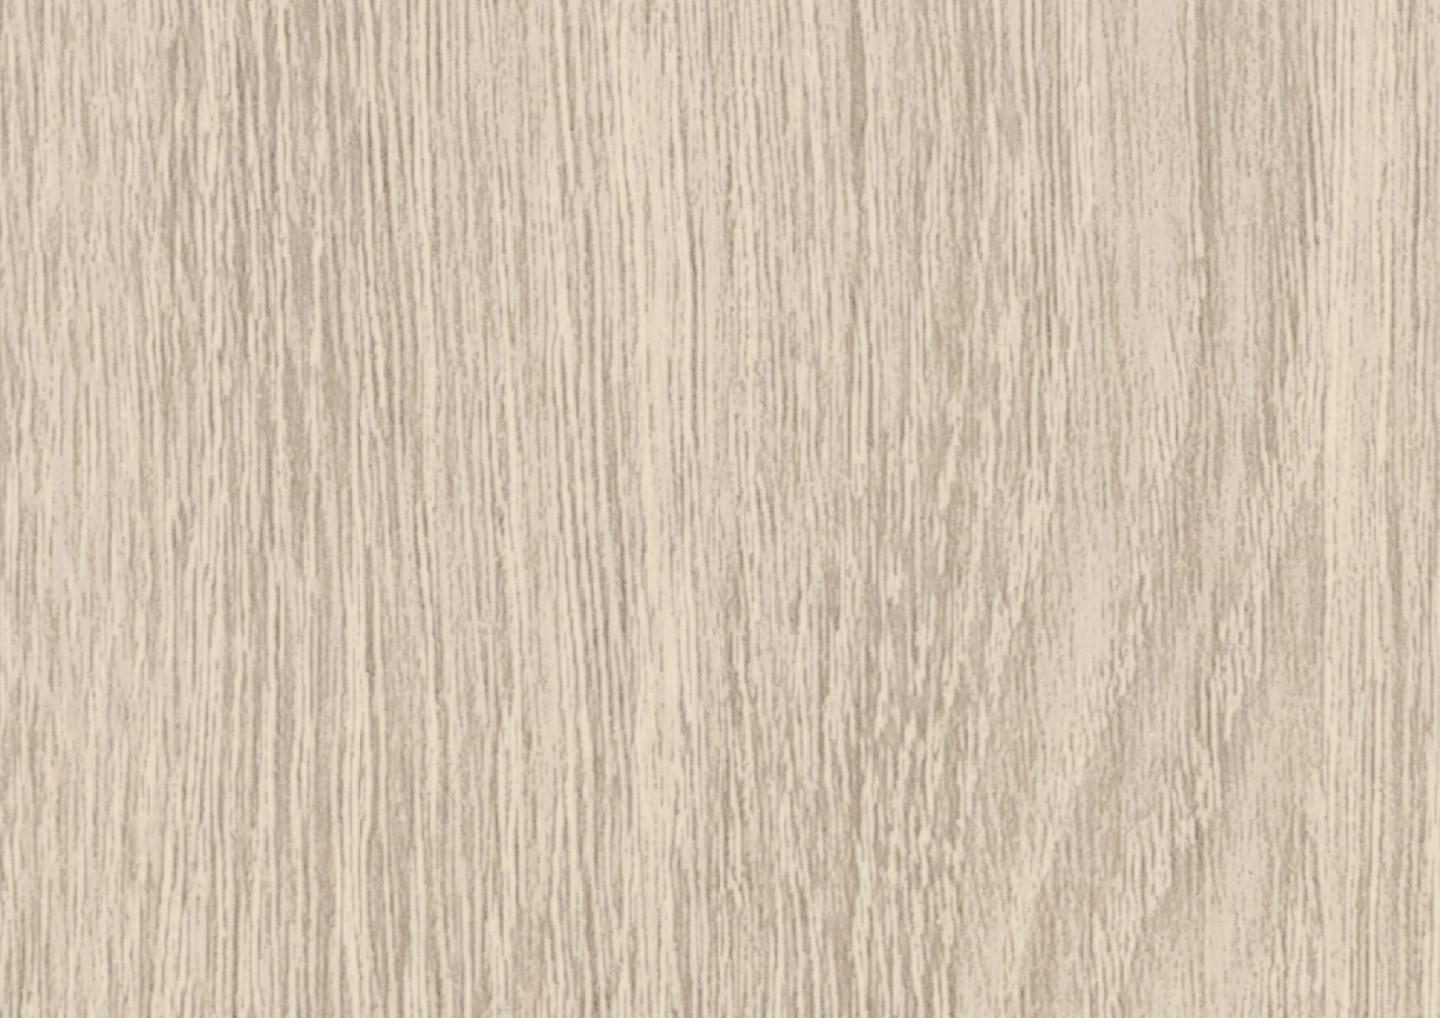 Compuesto-PVC - White Oak Color Options